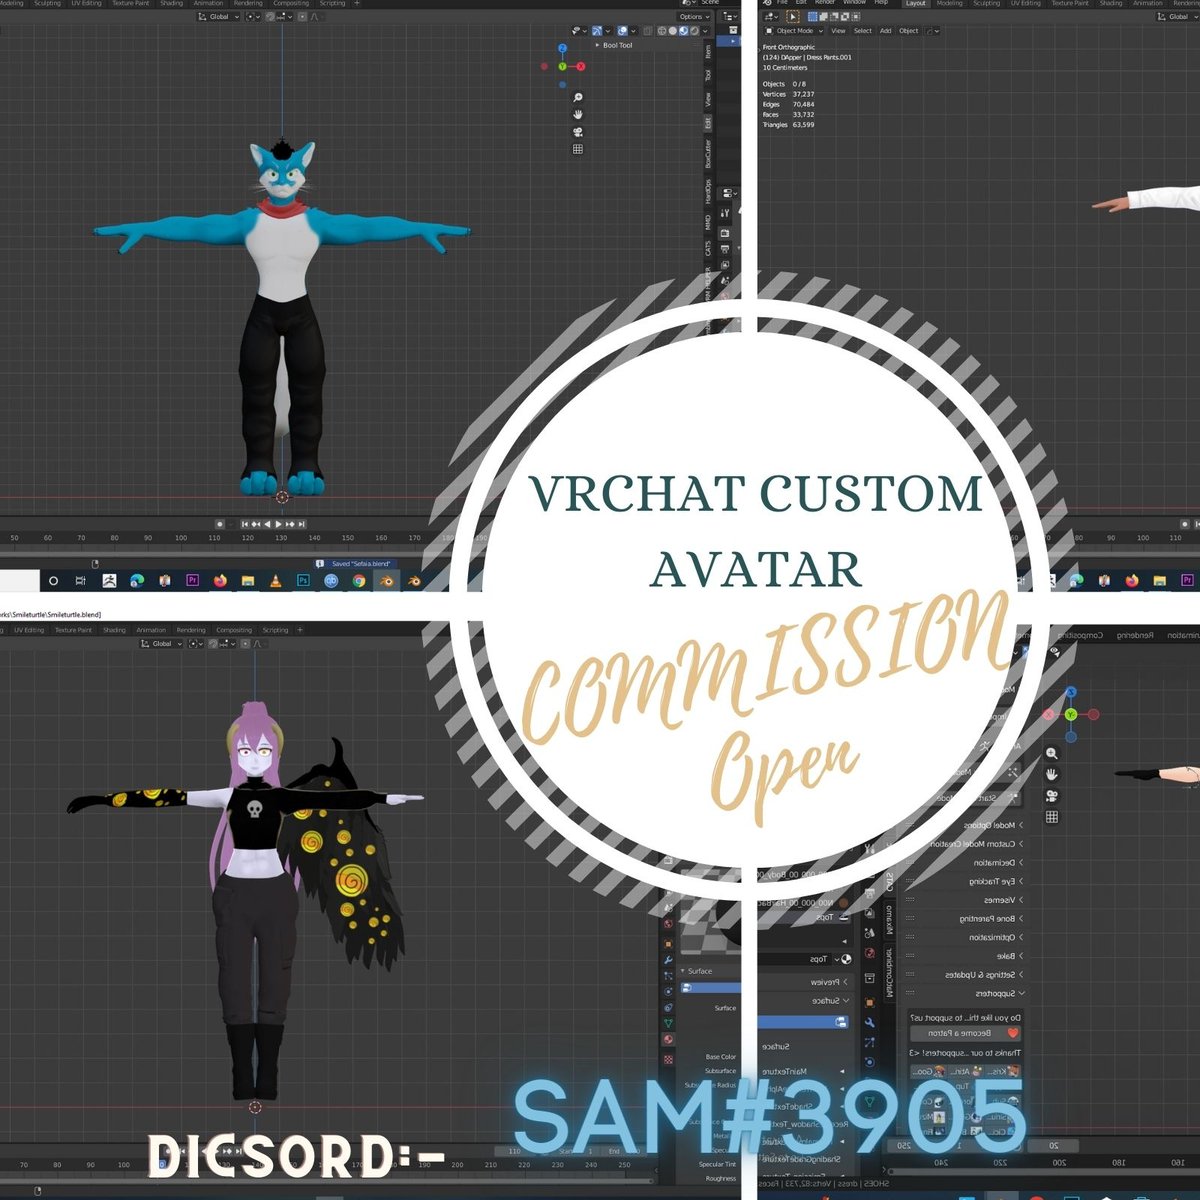 VRChat Custom Avatar - Commission OPEN
#vrchat #VR #CustomAvatar #VRC #Commission